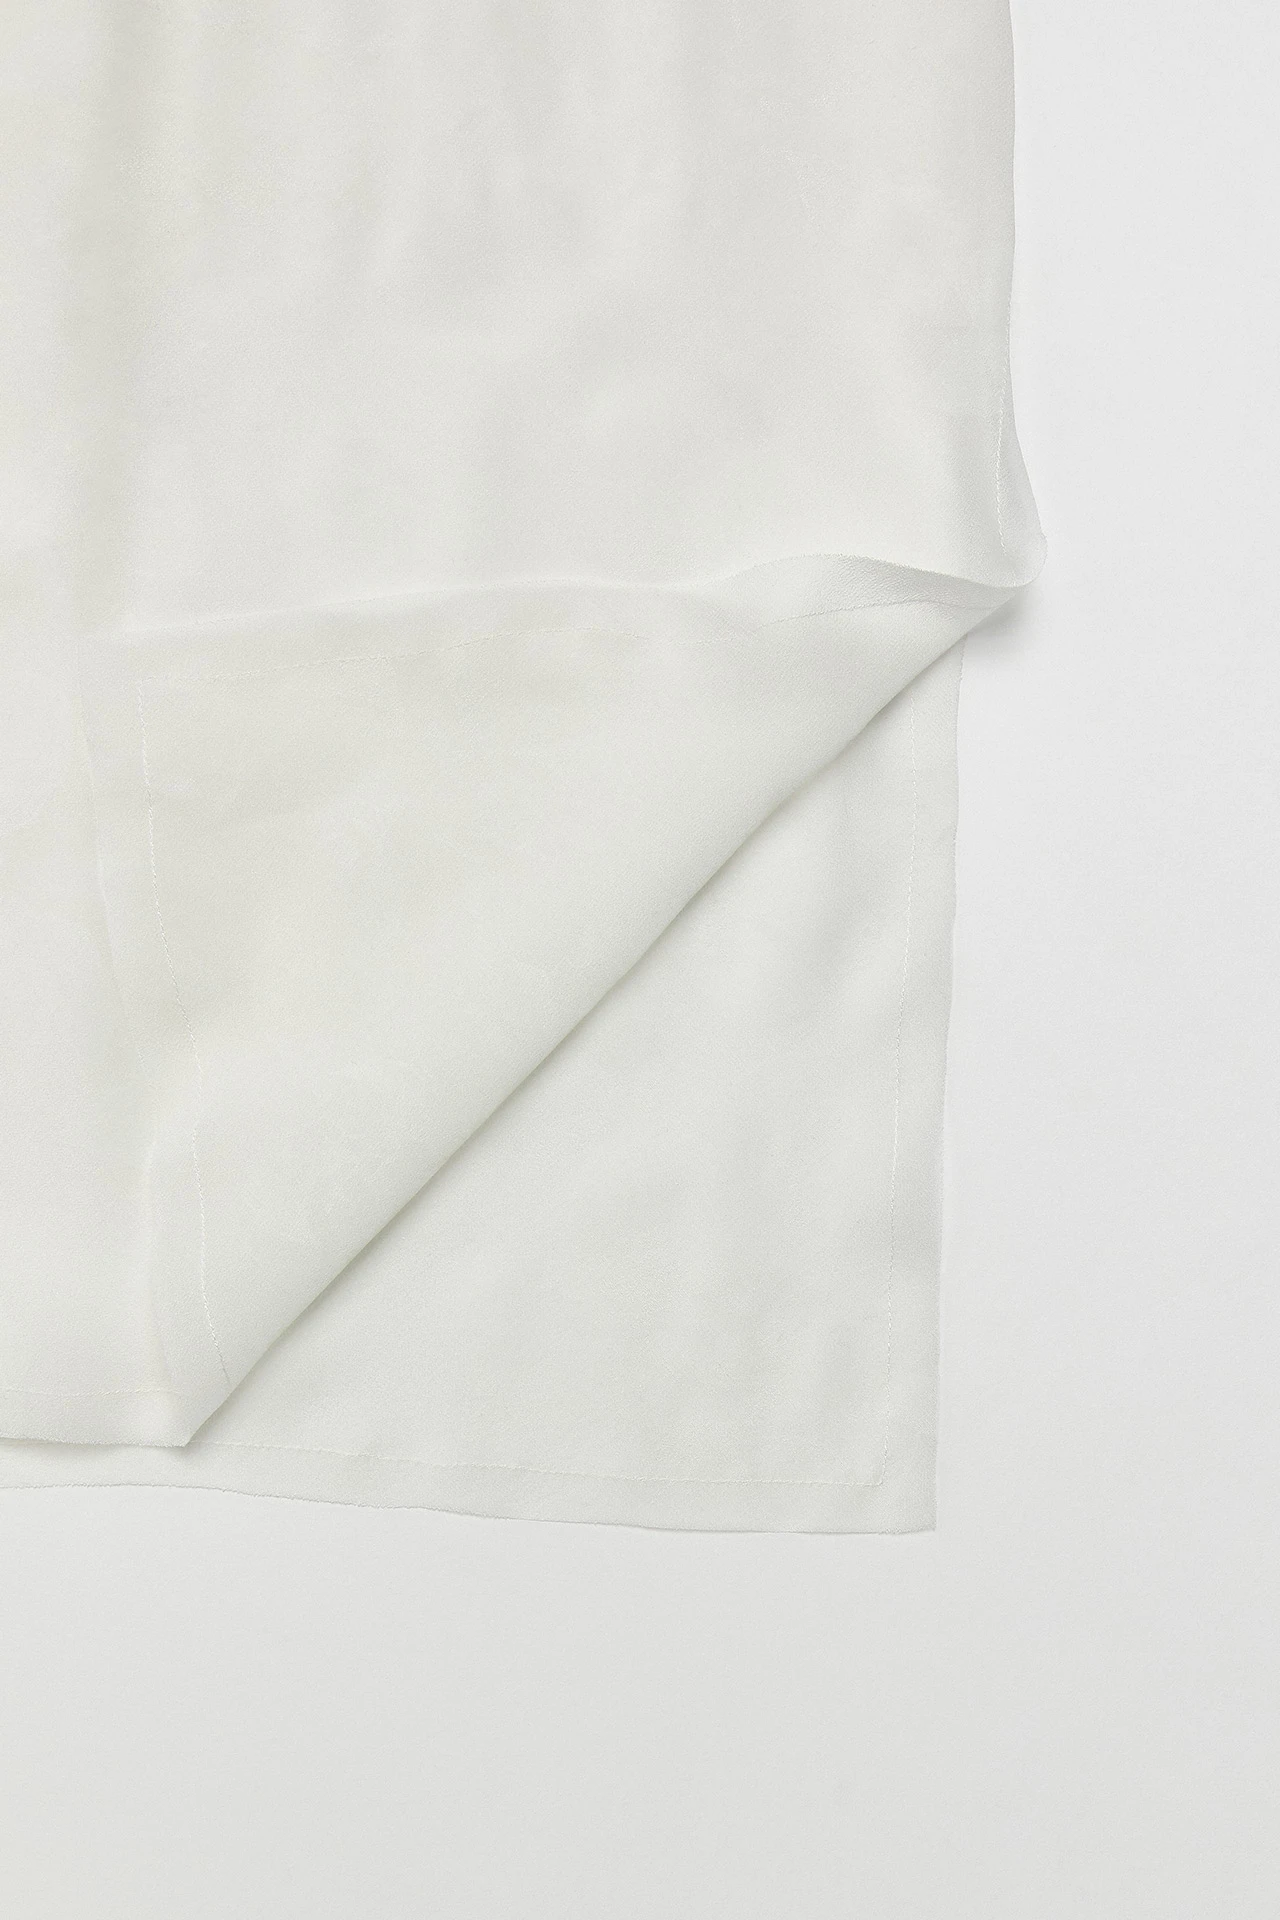 Miista-lorelay-white-dress-02